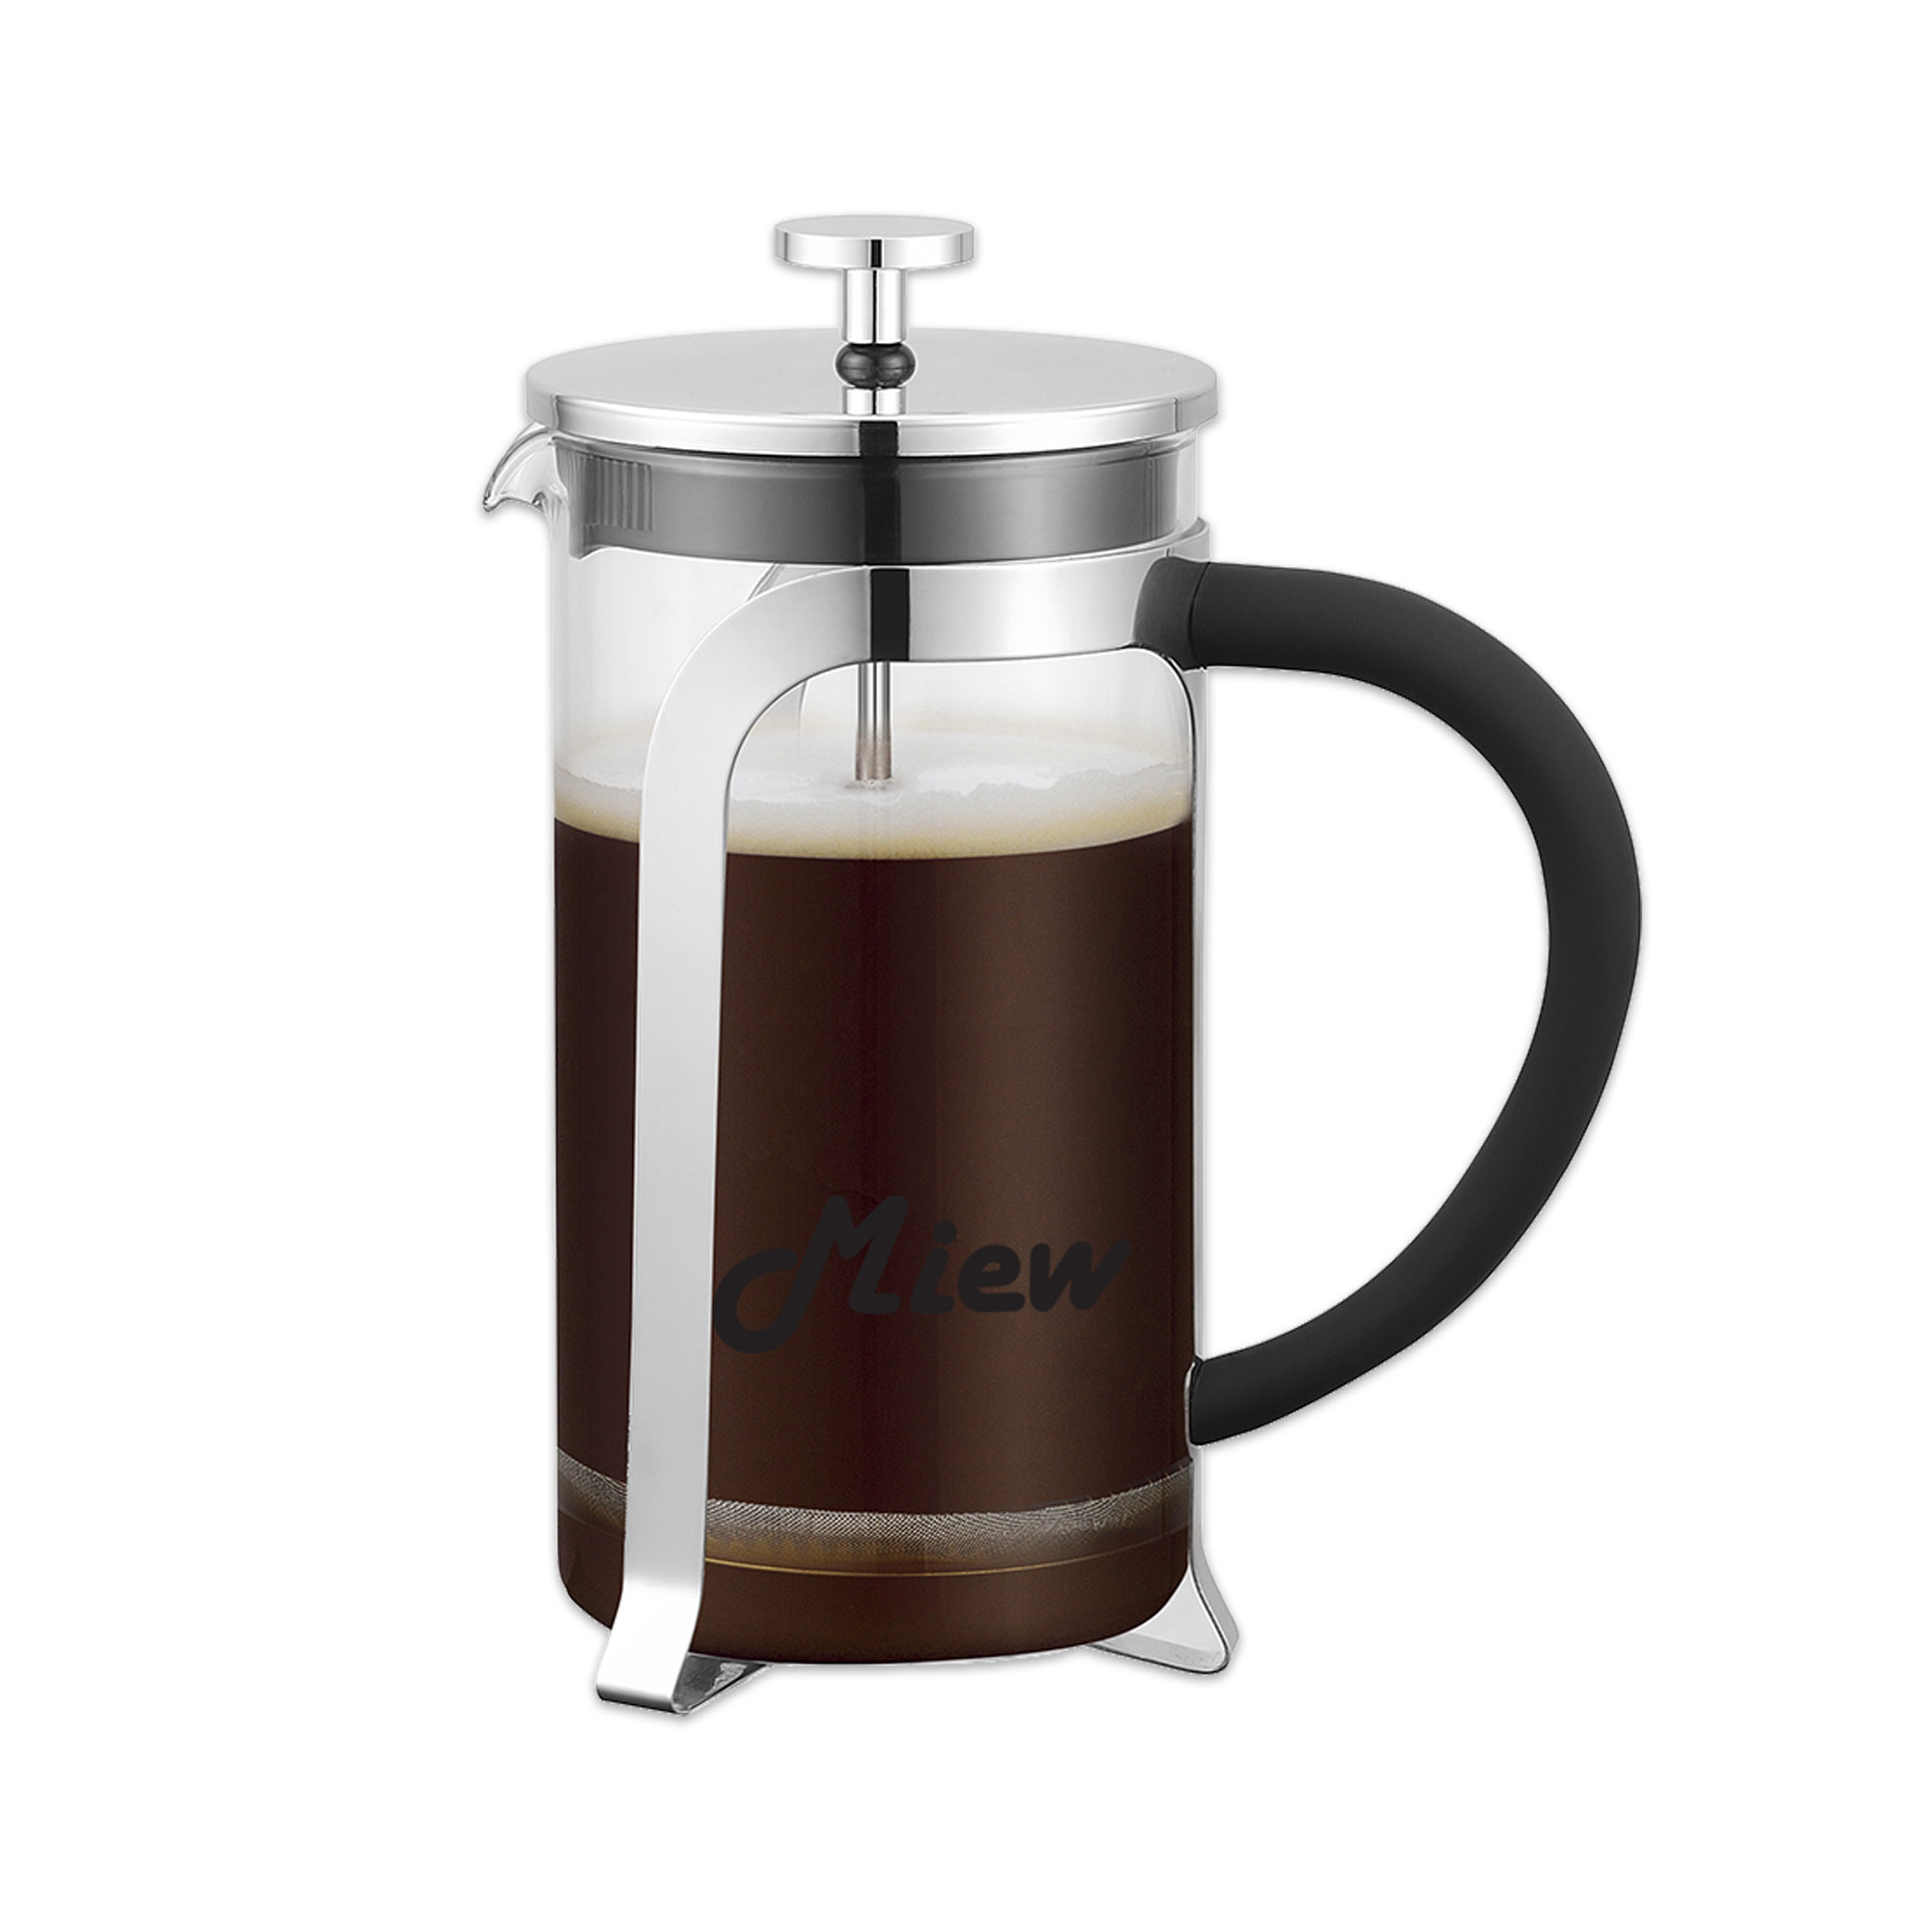 Miew French Press coffee maker กาชงกาแฟ เหยือกชงกาแฟ ที่ชงกาแฟ เครื่องชงกาแฟ แบบกด ทำจากแก้ว และ สแตนเลสสตีล ความจุ 600ml. รุ่น B450600